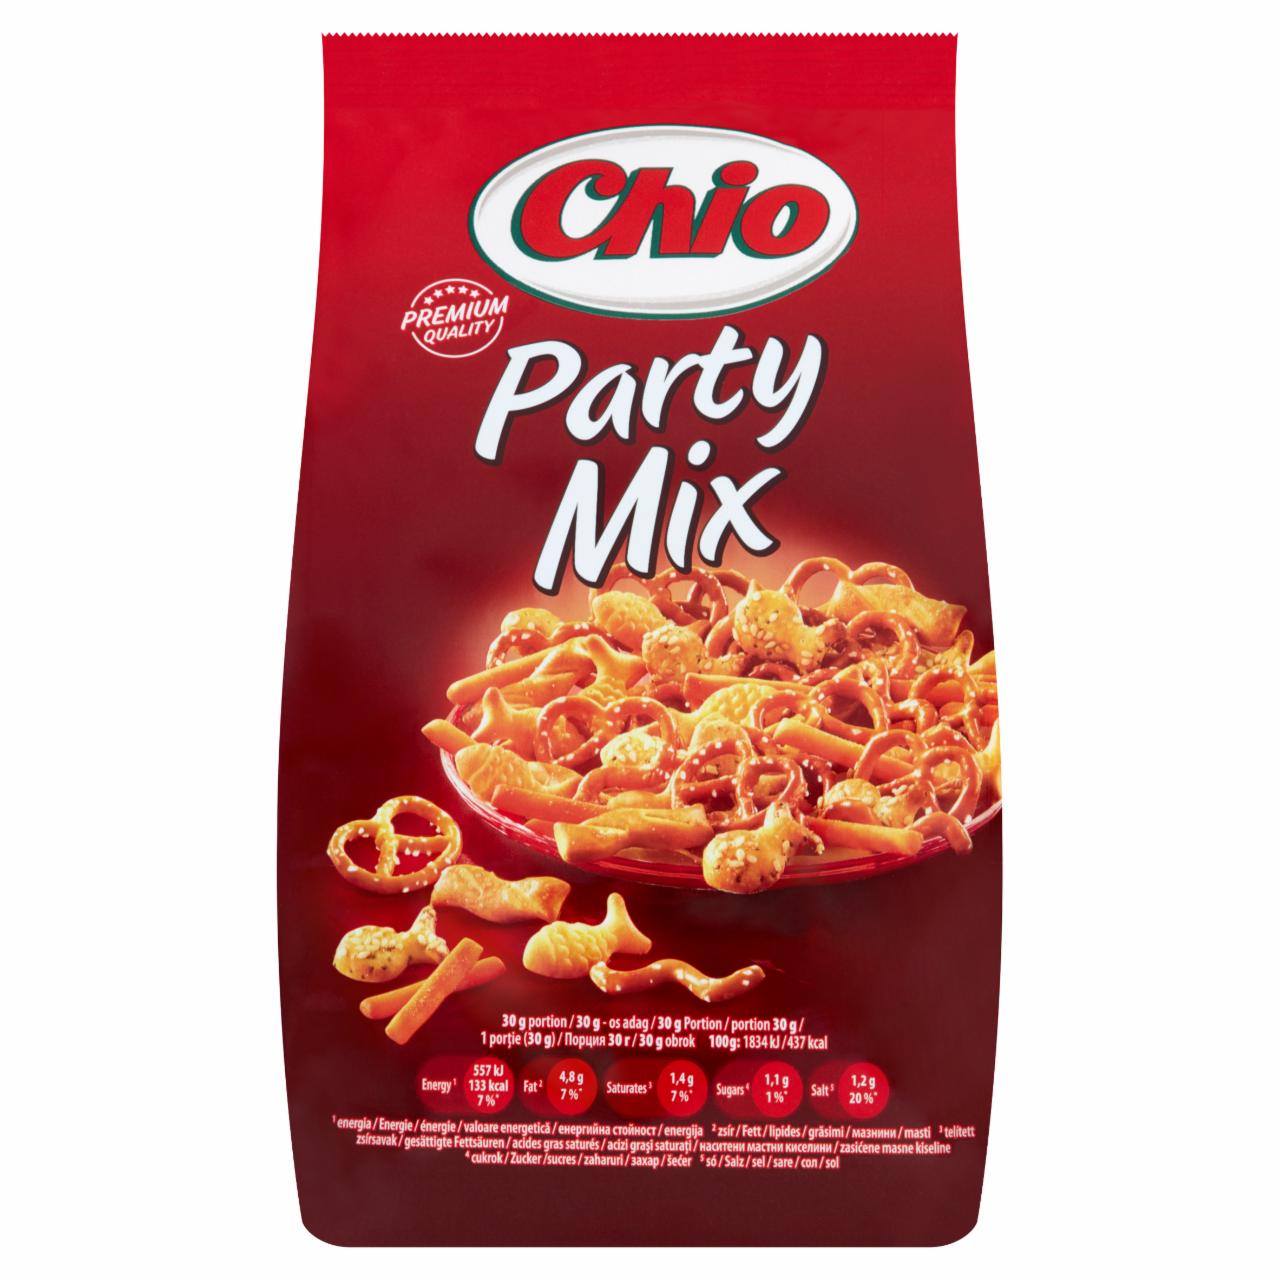 Képek - Chio Party Mix sós kréker keverék 200 g